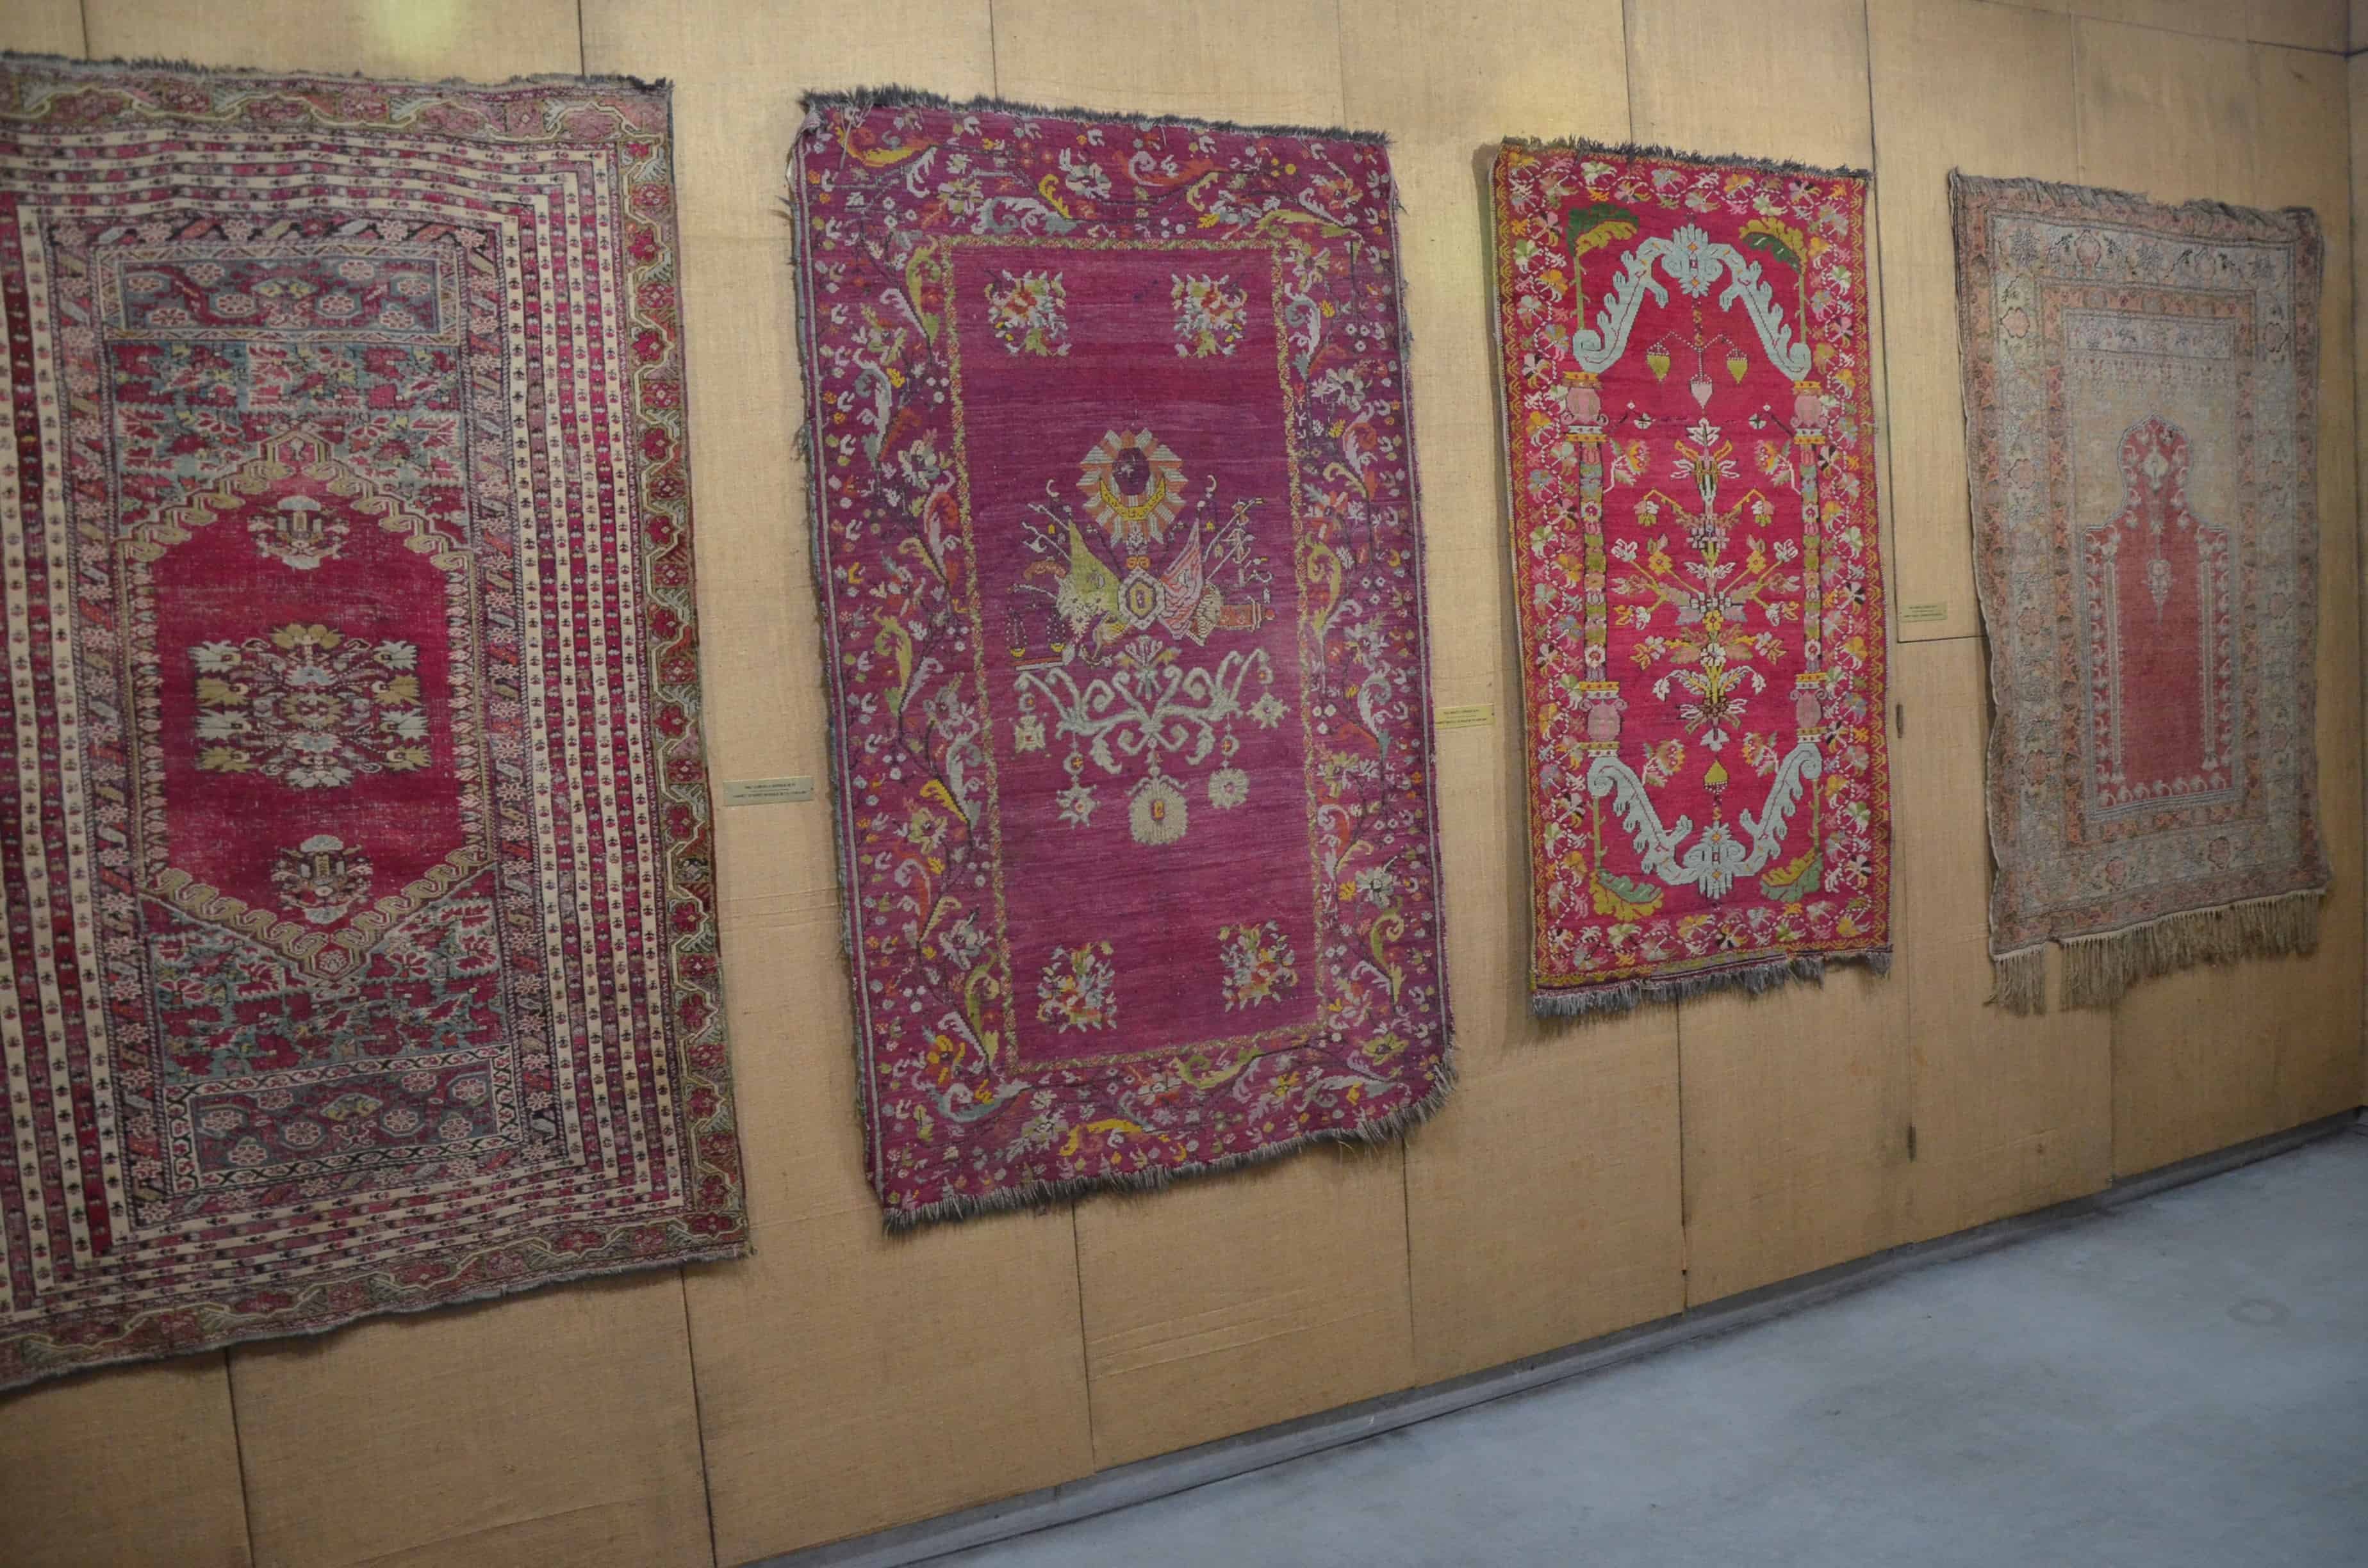 Carpets at the Izmir Ethnography Museum in Izmir, Turkey